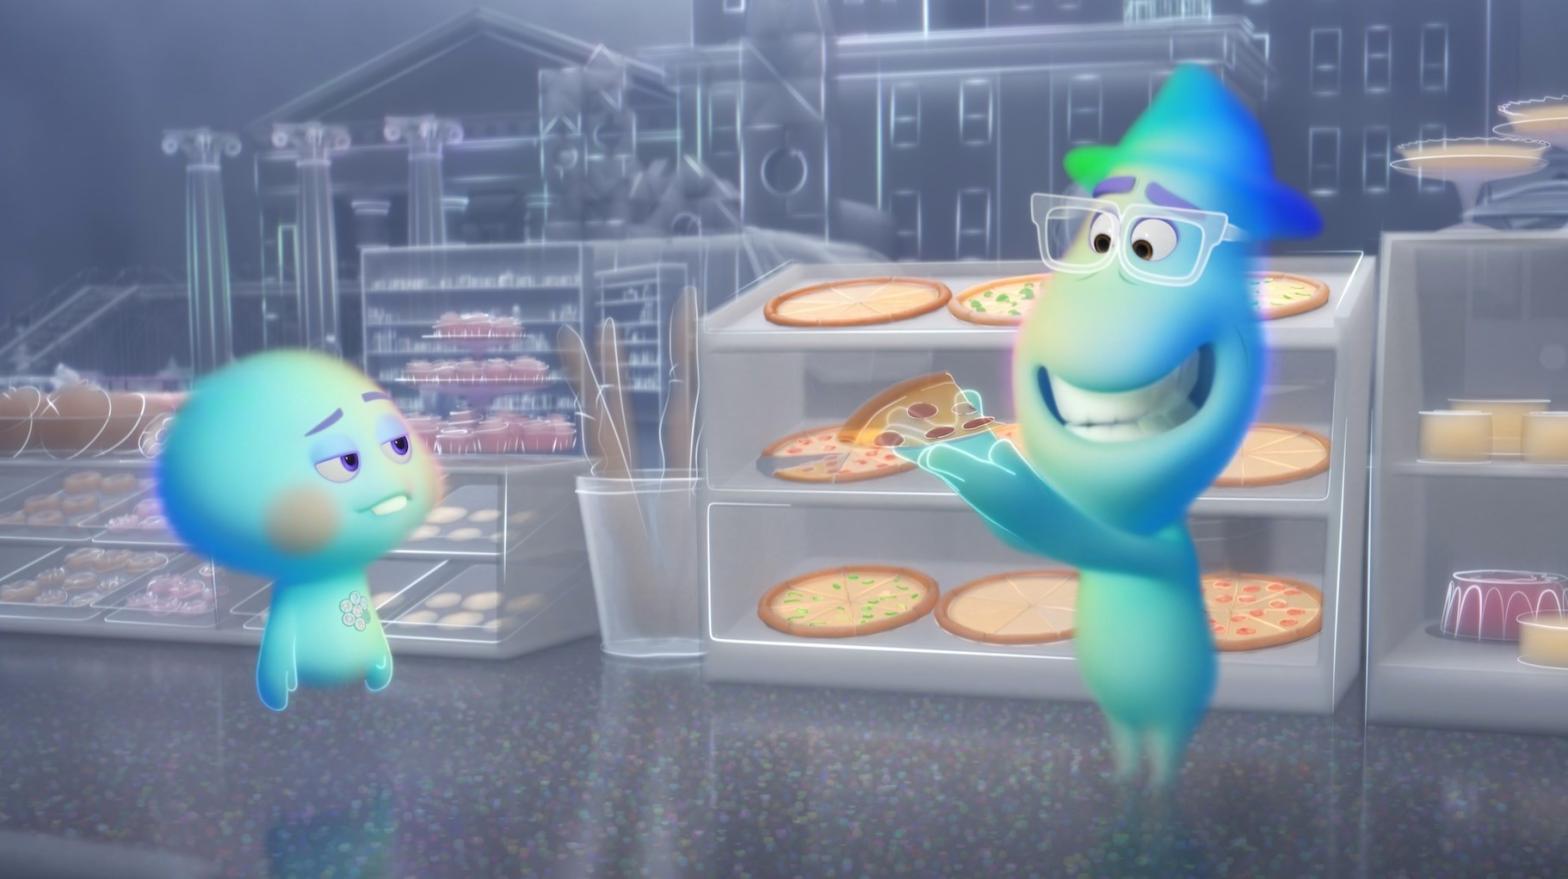 Joe and 22 will be coming home this Christmas. (Image: Disney/Pixar)